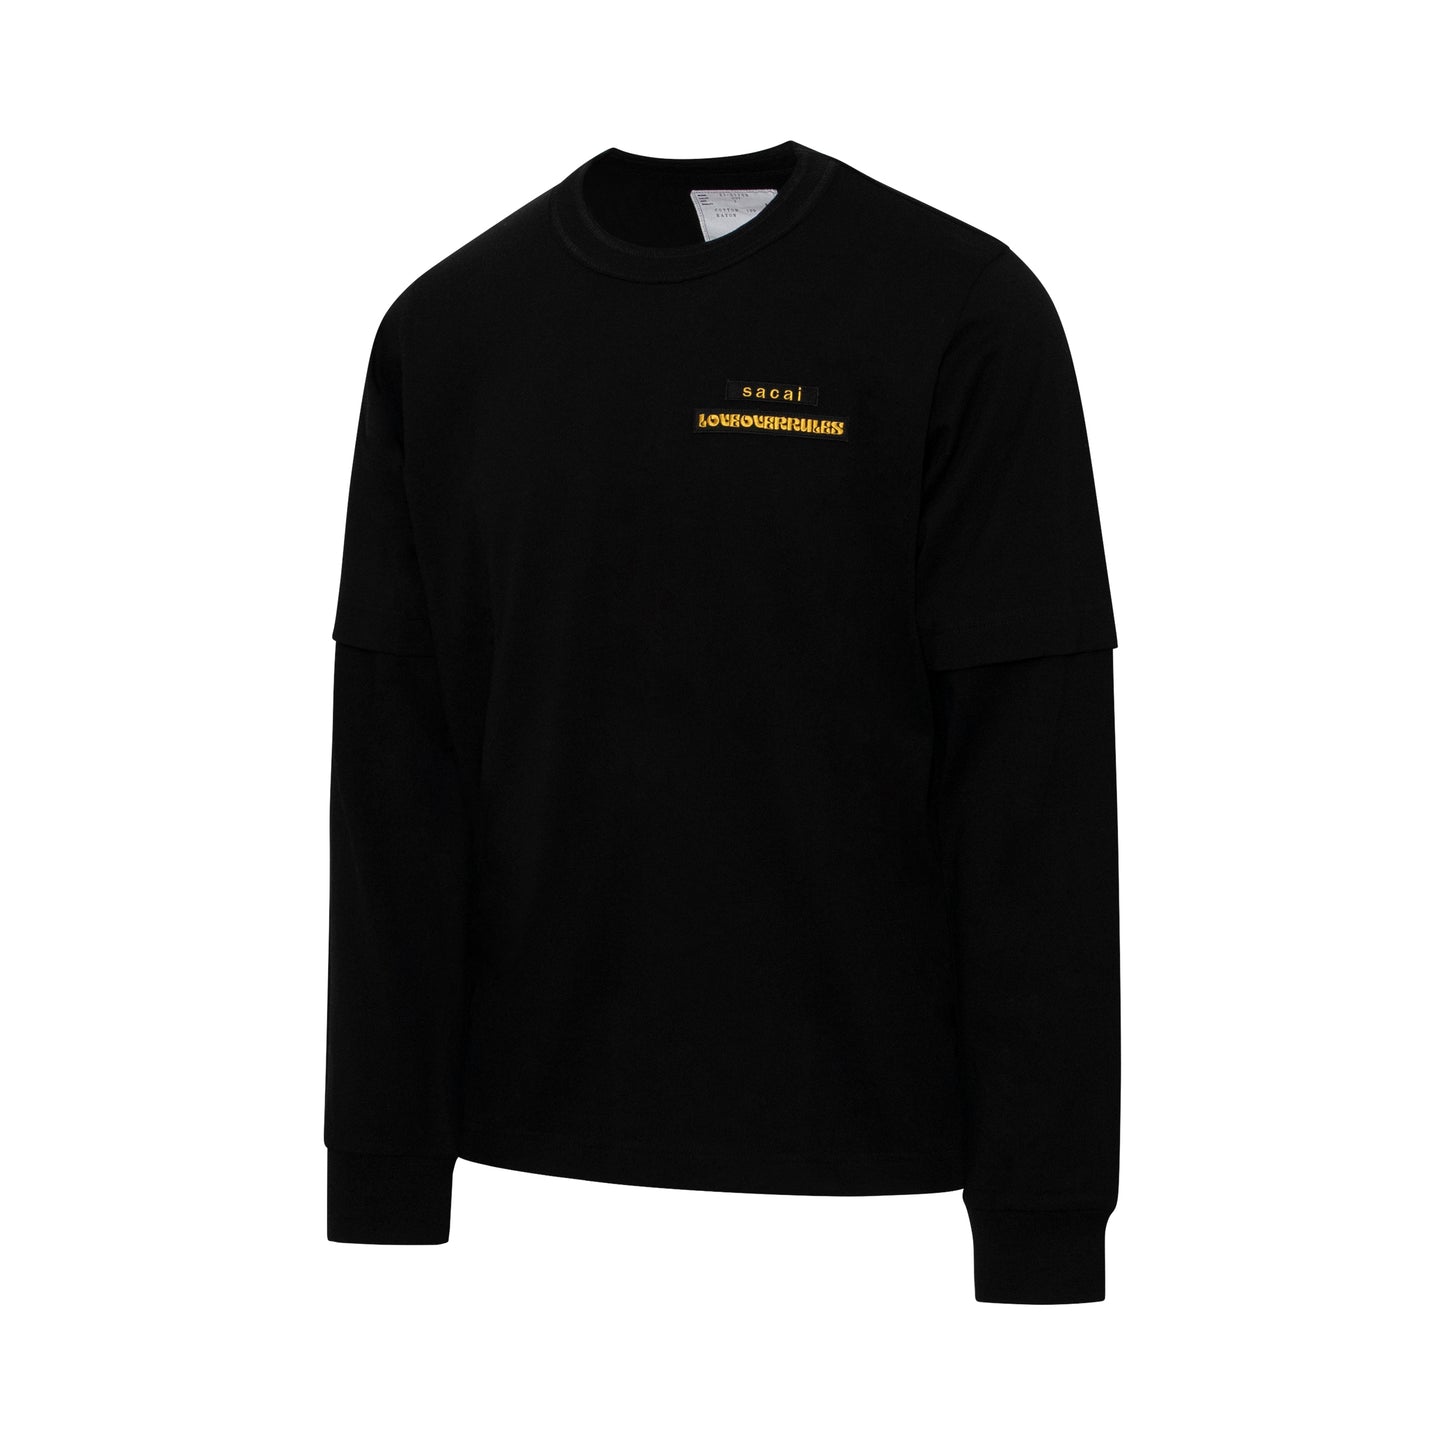 Sacai Graphic Long Sleeve T-Shirt in Black